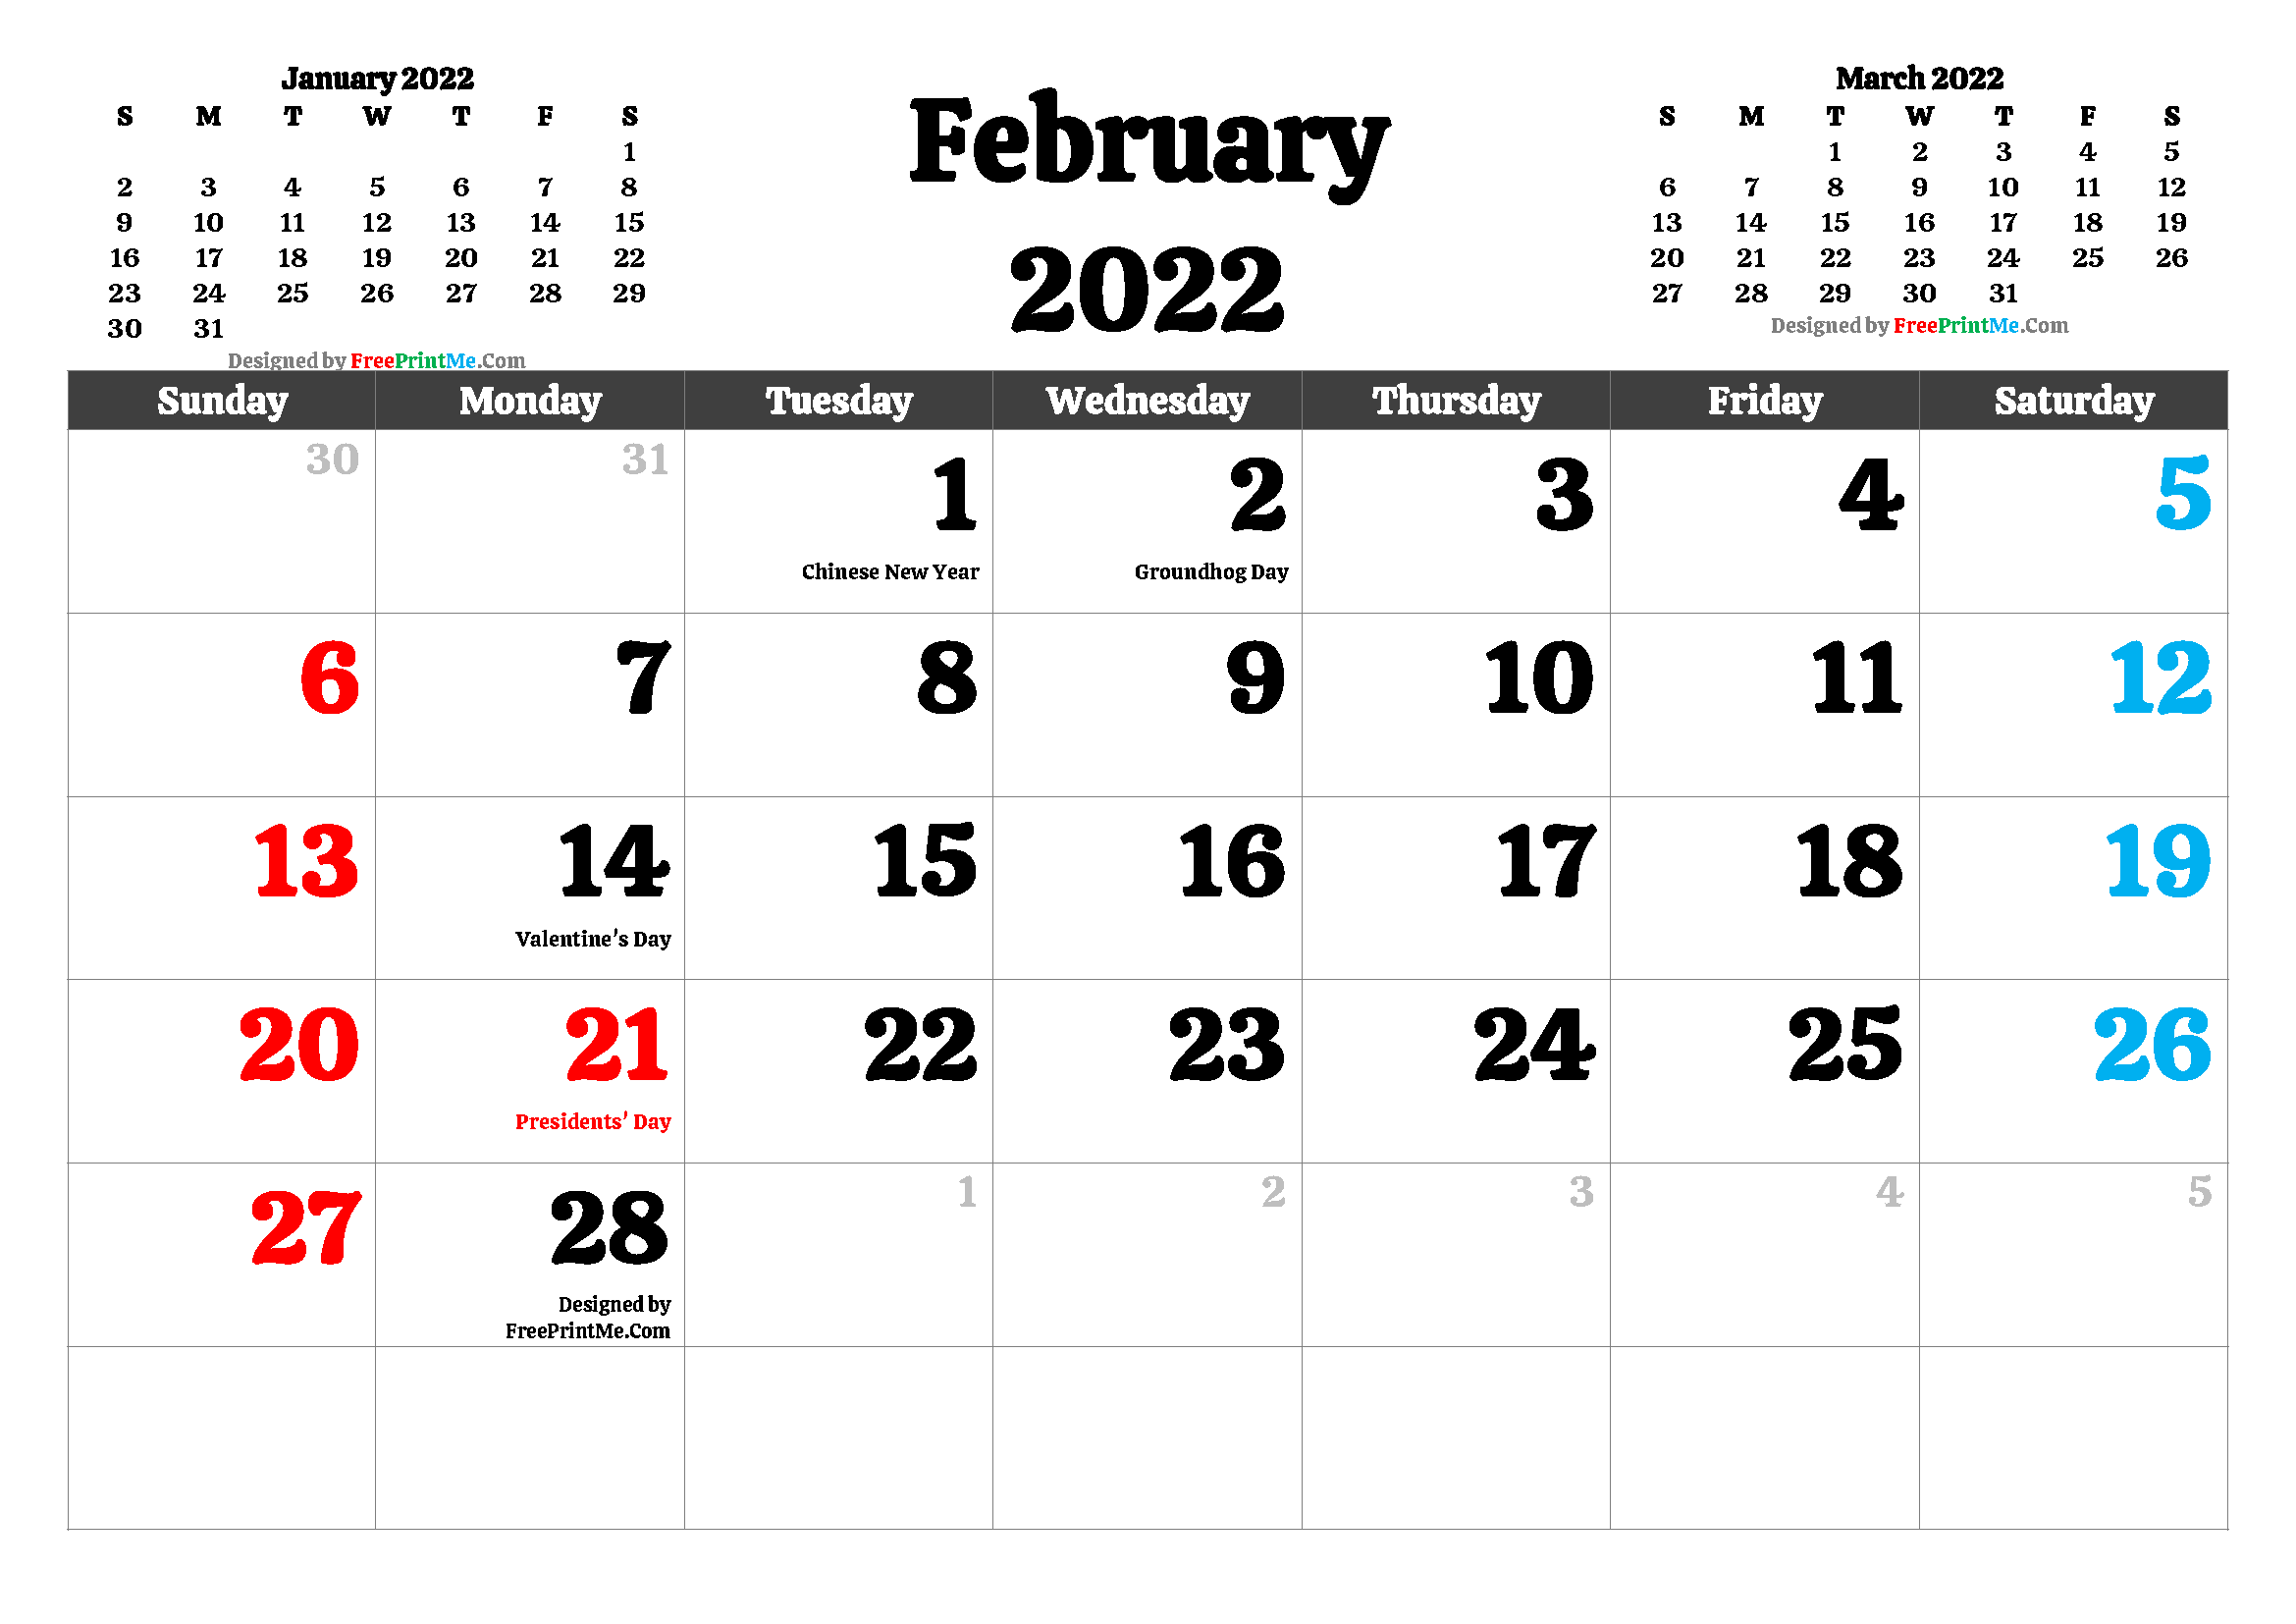 Free Printable February 2022 Calendar Free Printable February 2022 Calendar Pdf And Image